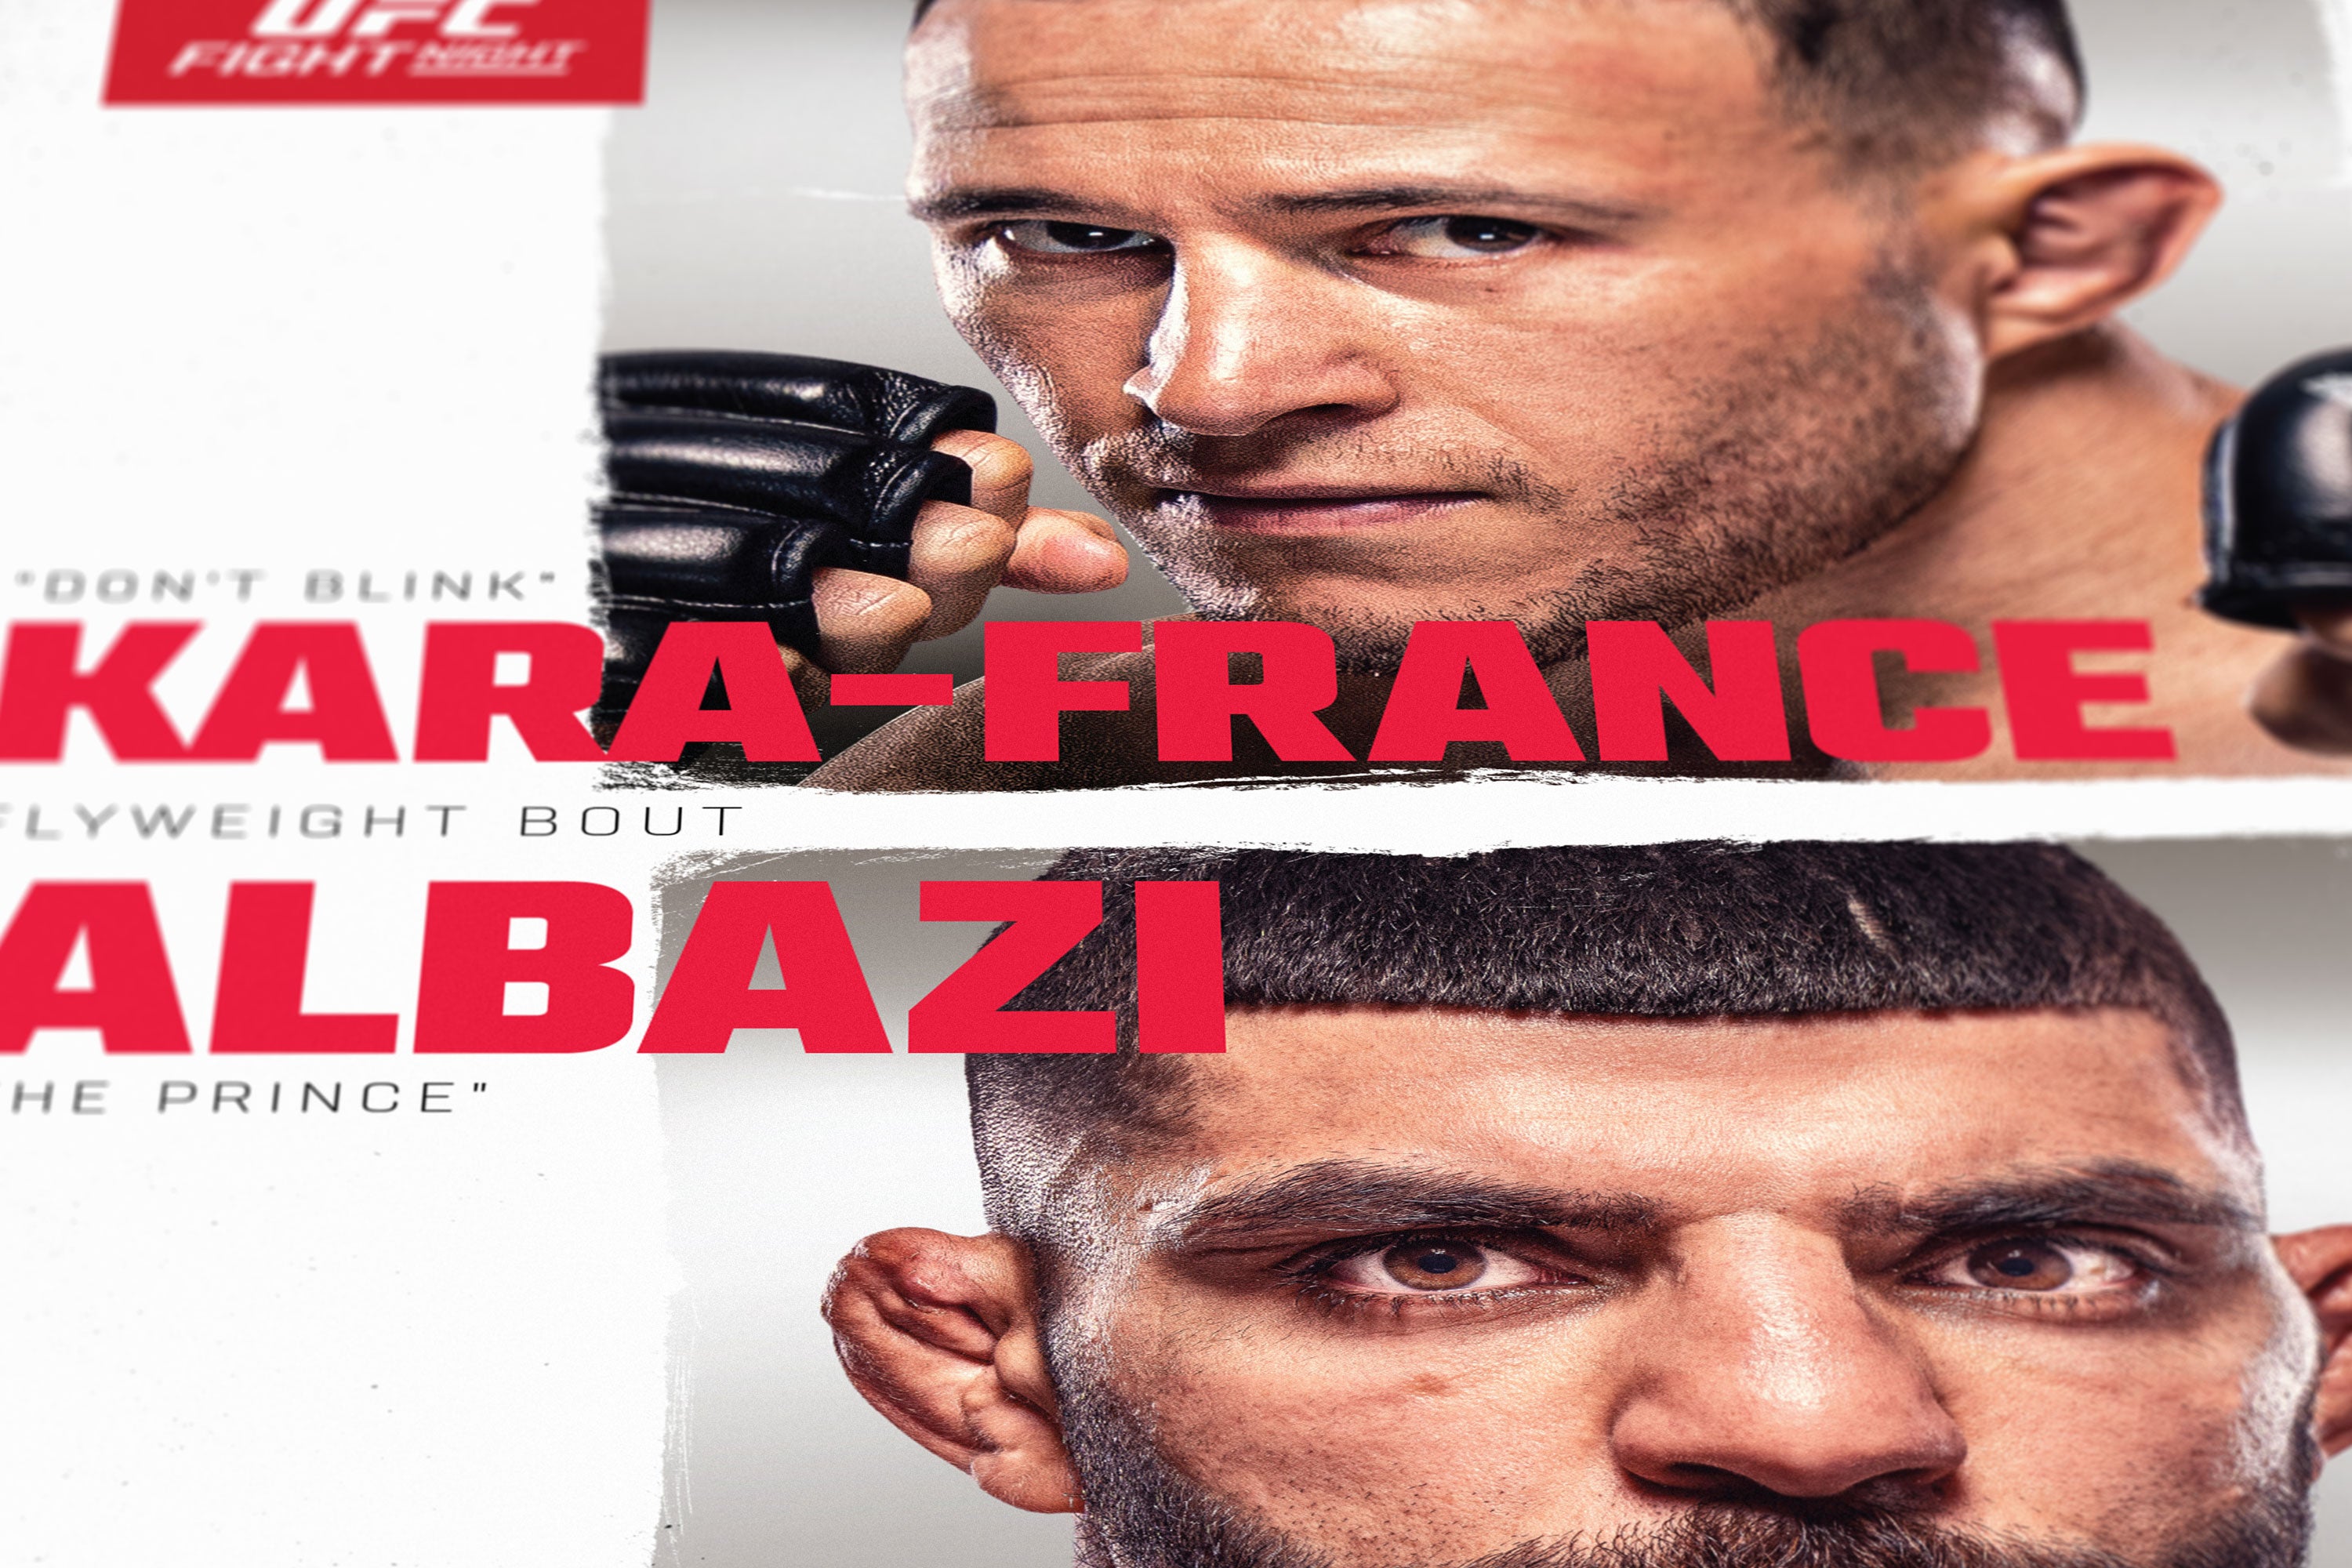 UFC Fight Night: Kara-France vs Albazi Autographed Event Poster